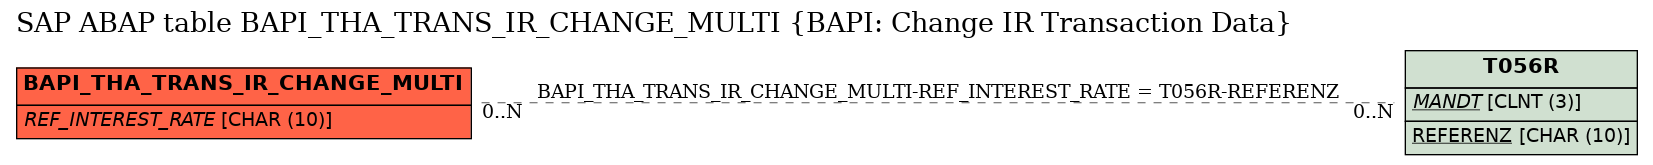 E-R Diagram for table BAPI_THA_TRANS_IR_CHANGE_MULTI (BAPI: Change IR Transaction Data)